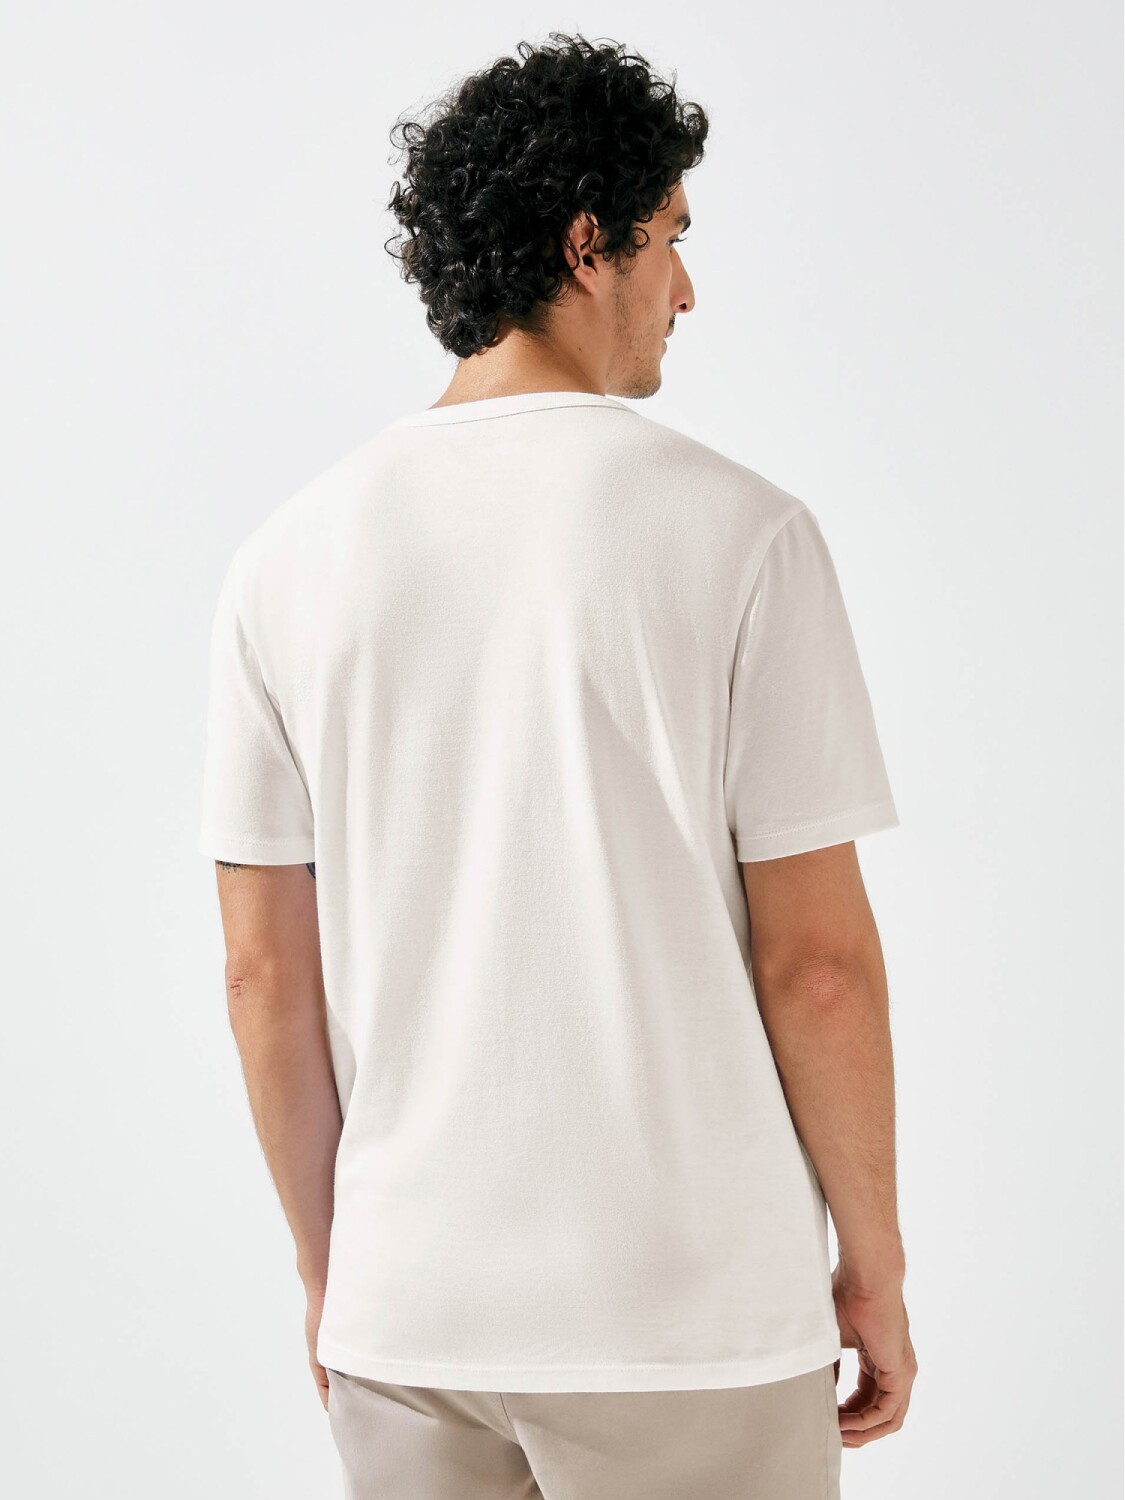 Camisetas Blumarine - Camiseta - Color Carne Y Neutral - 2T017AN0729